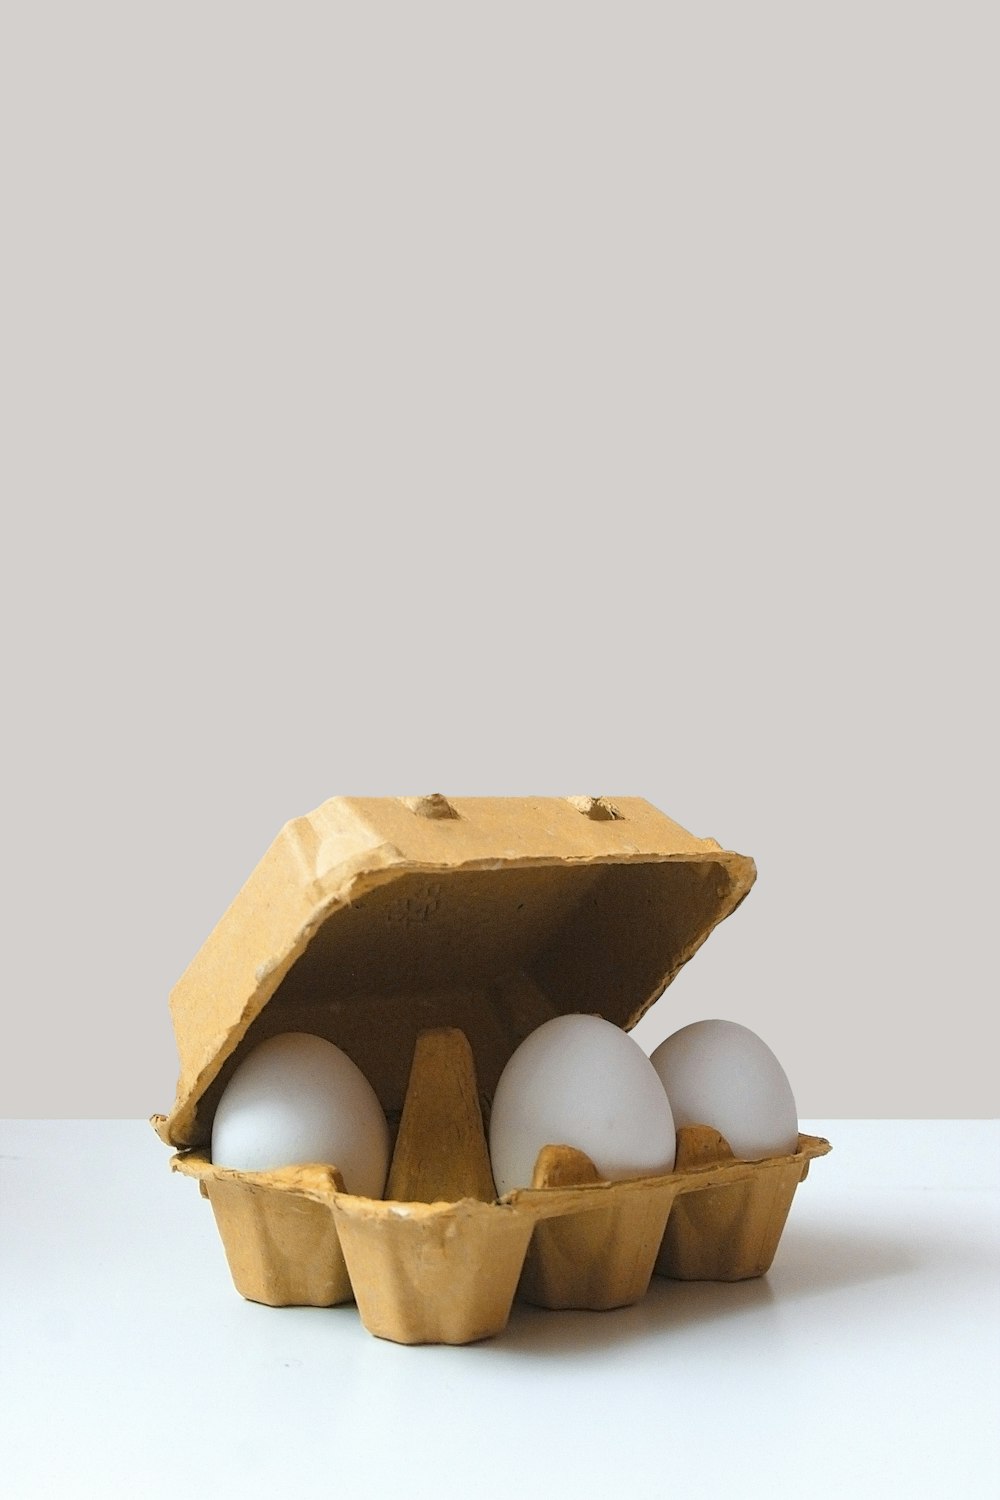 three white eggs inside tray